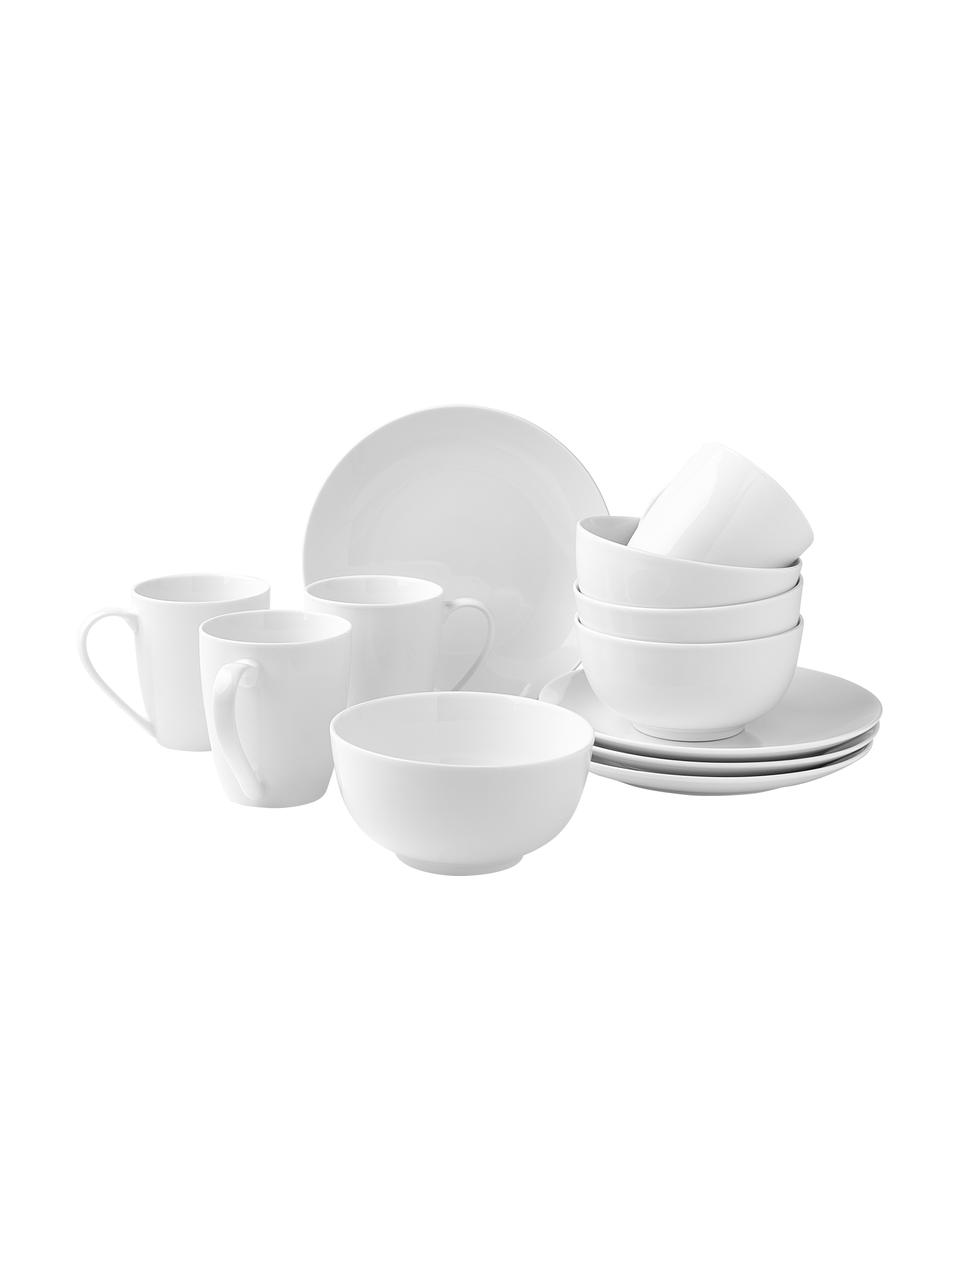 Set de desayuno de porcelana Delight Classic, 4 comensales (12 pzas.), Porcelana, Blanco, 4 comensales (12 pzas.)